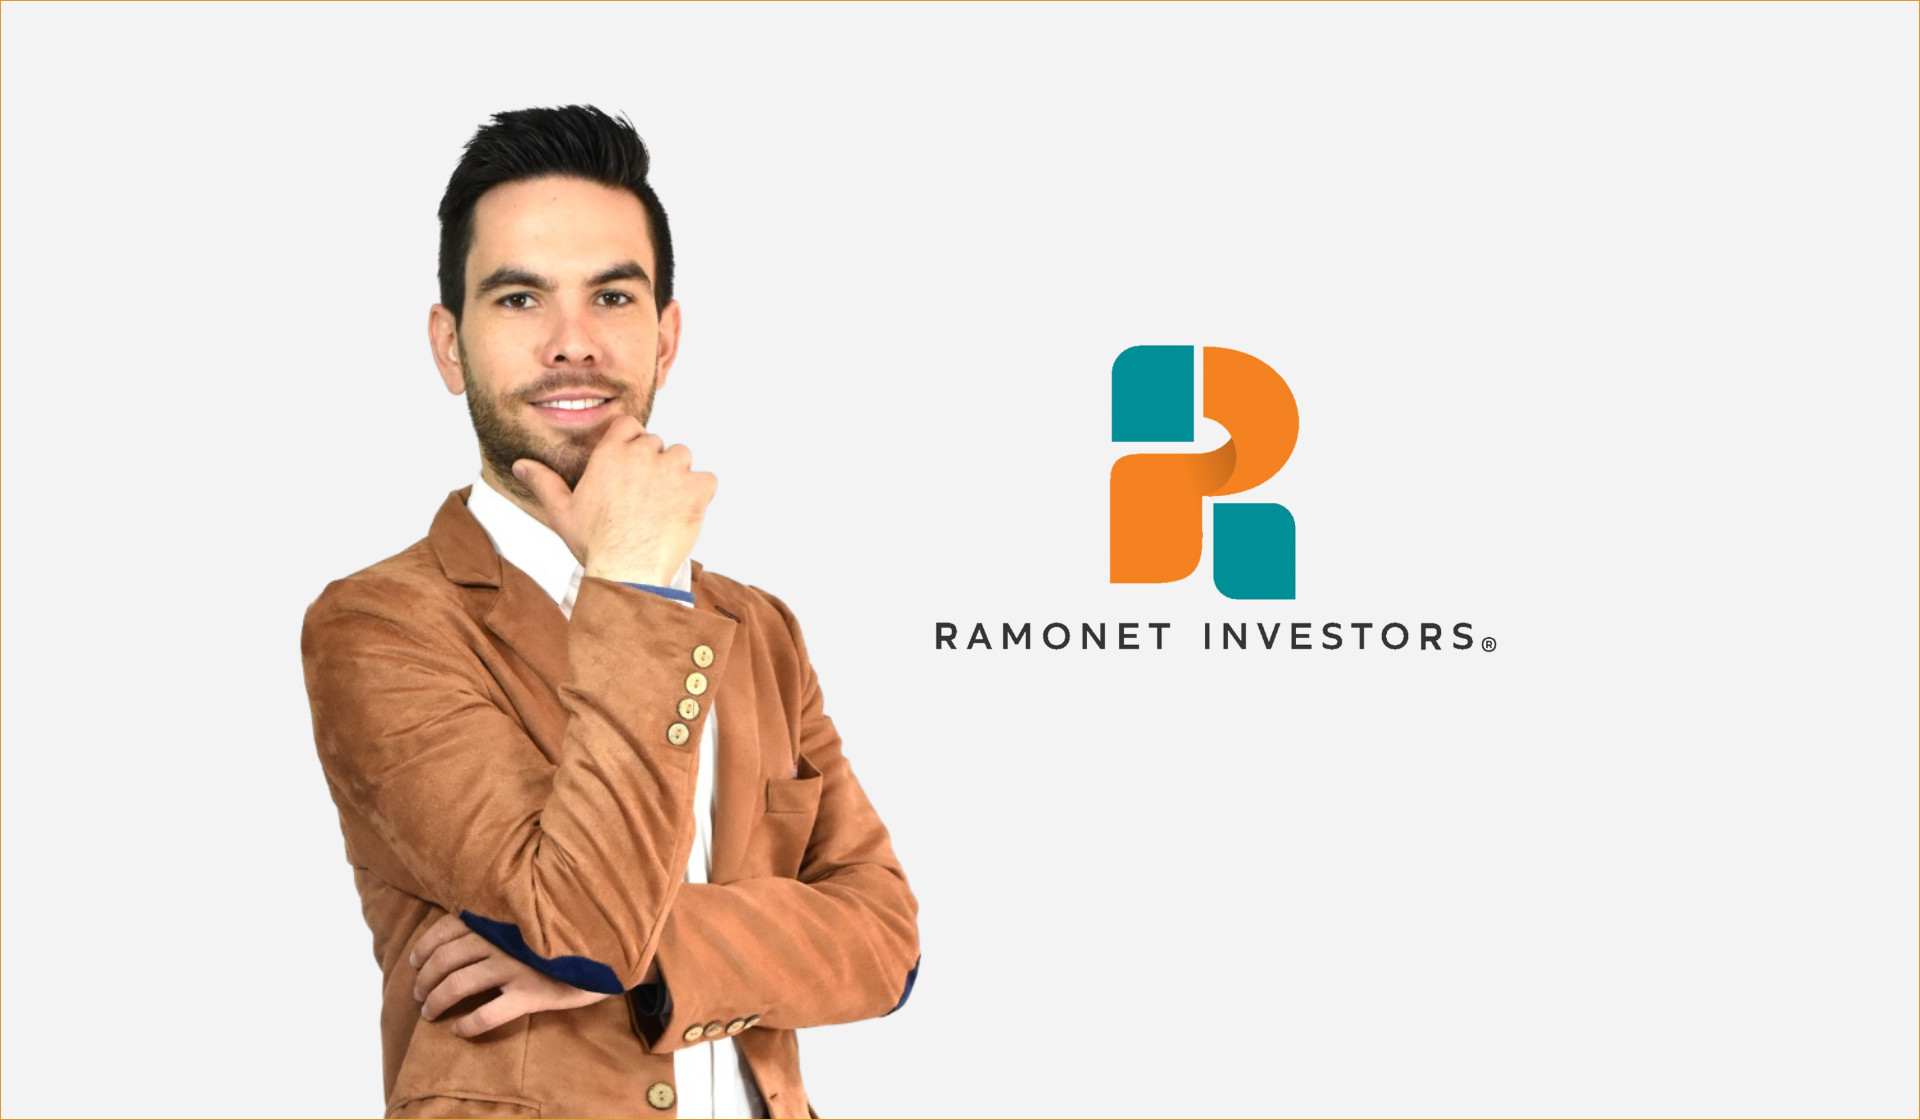 Ramonet Investors